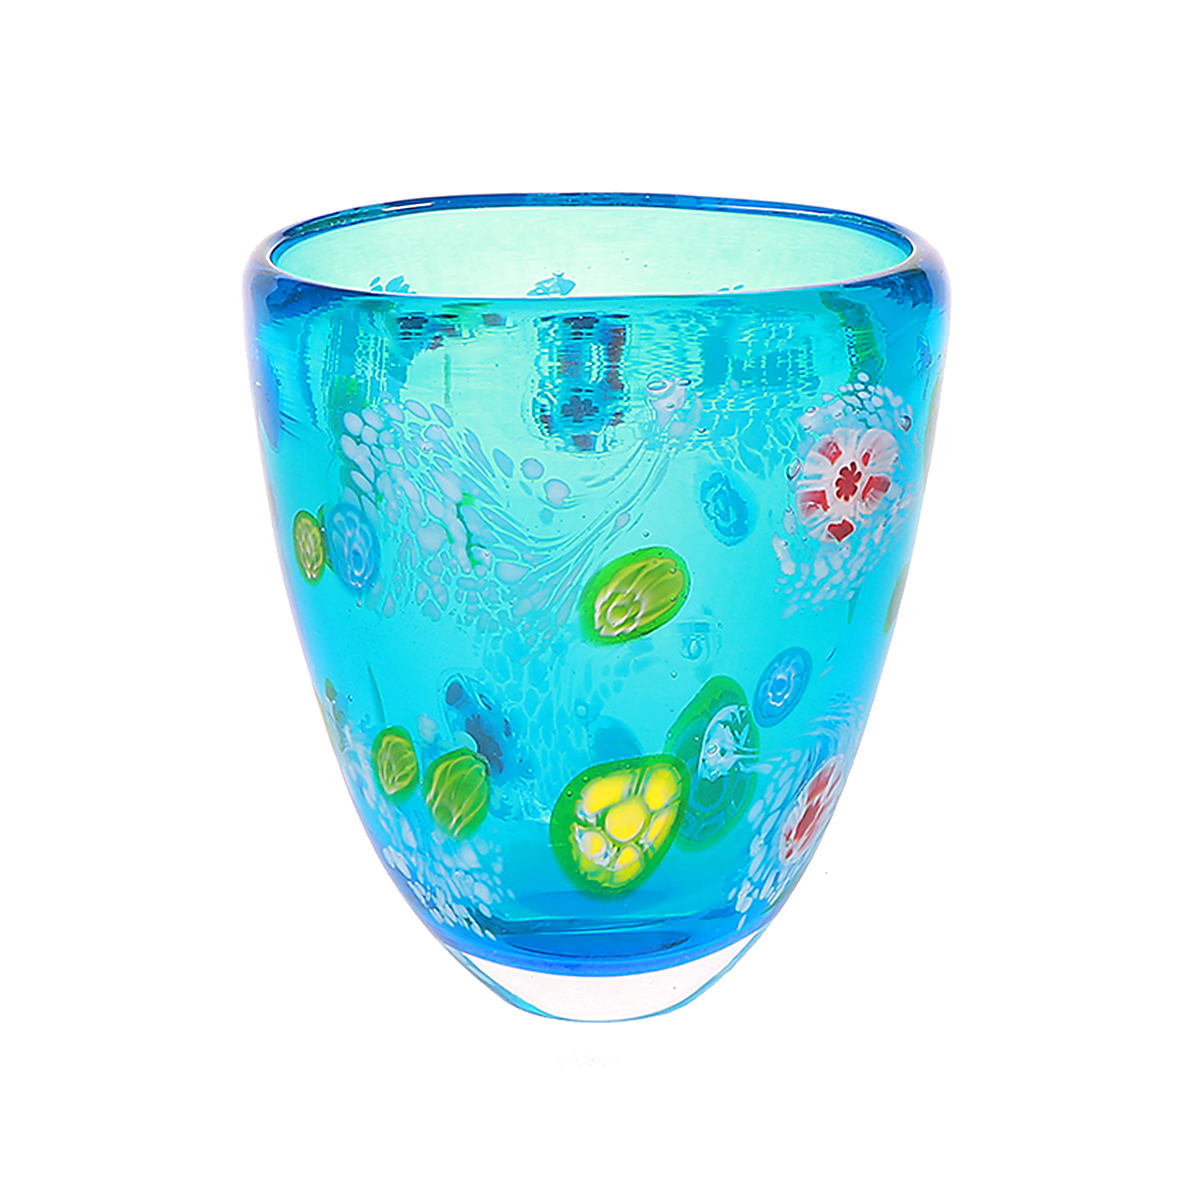 Ваза Art glass Водопад 18 см ваза hakbijl glass conical 12х15 см